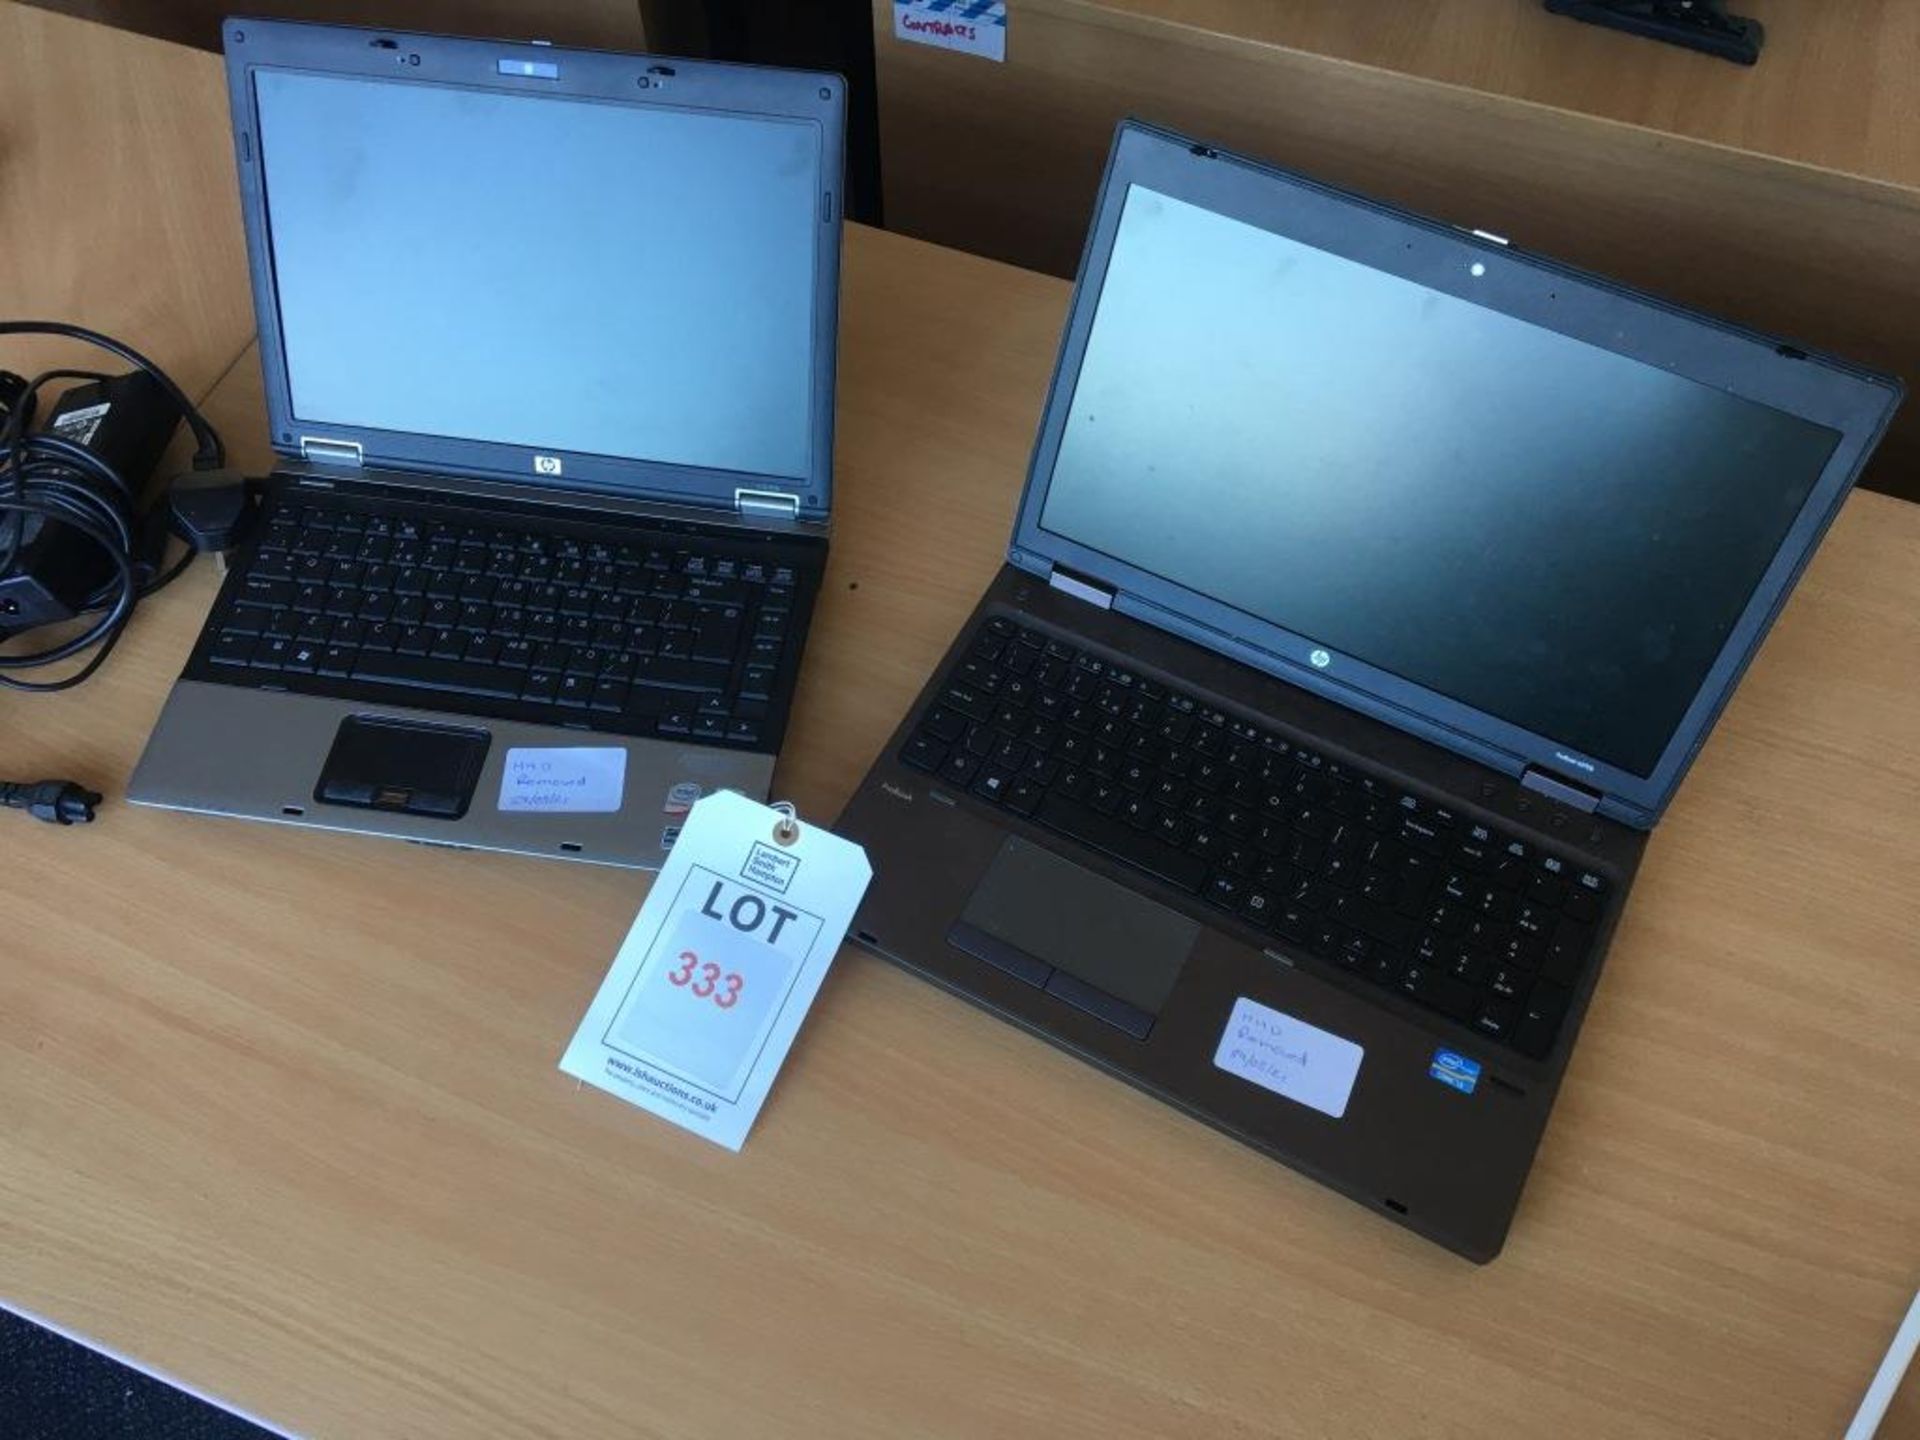 A HP 6530B laptop computer (Windows Vista, Intel Centrino 2 processor) and a HP Probook 6570B laptop